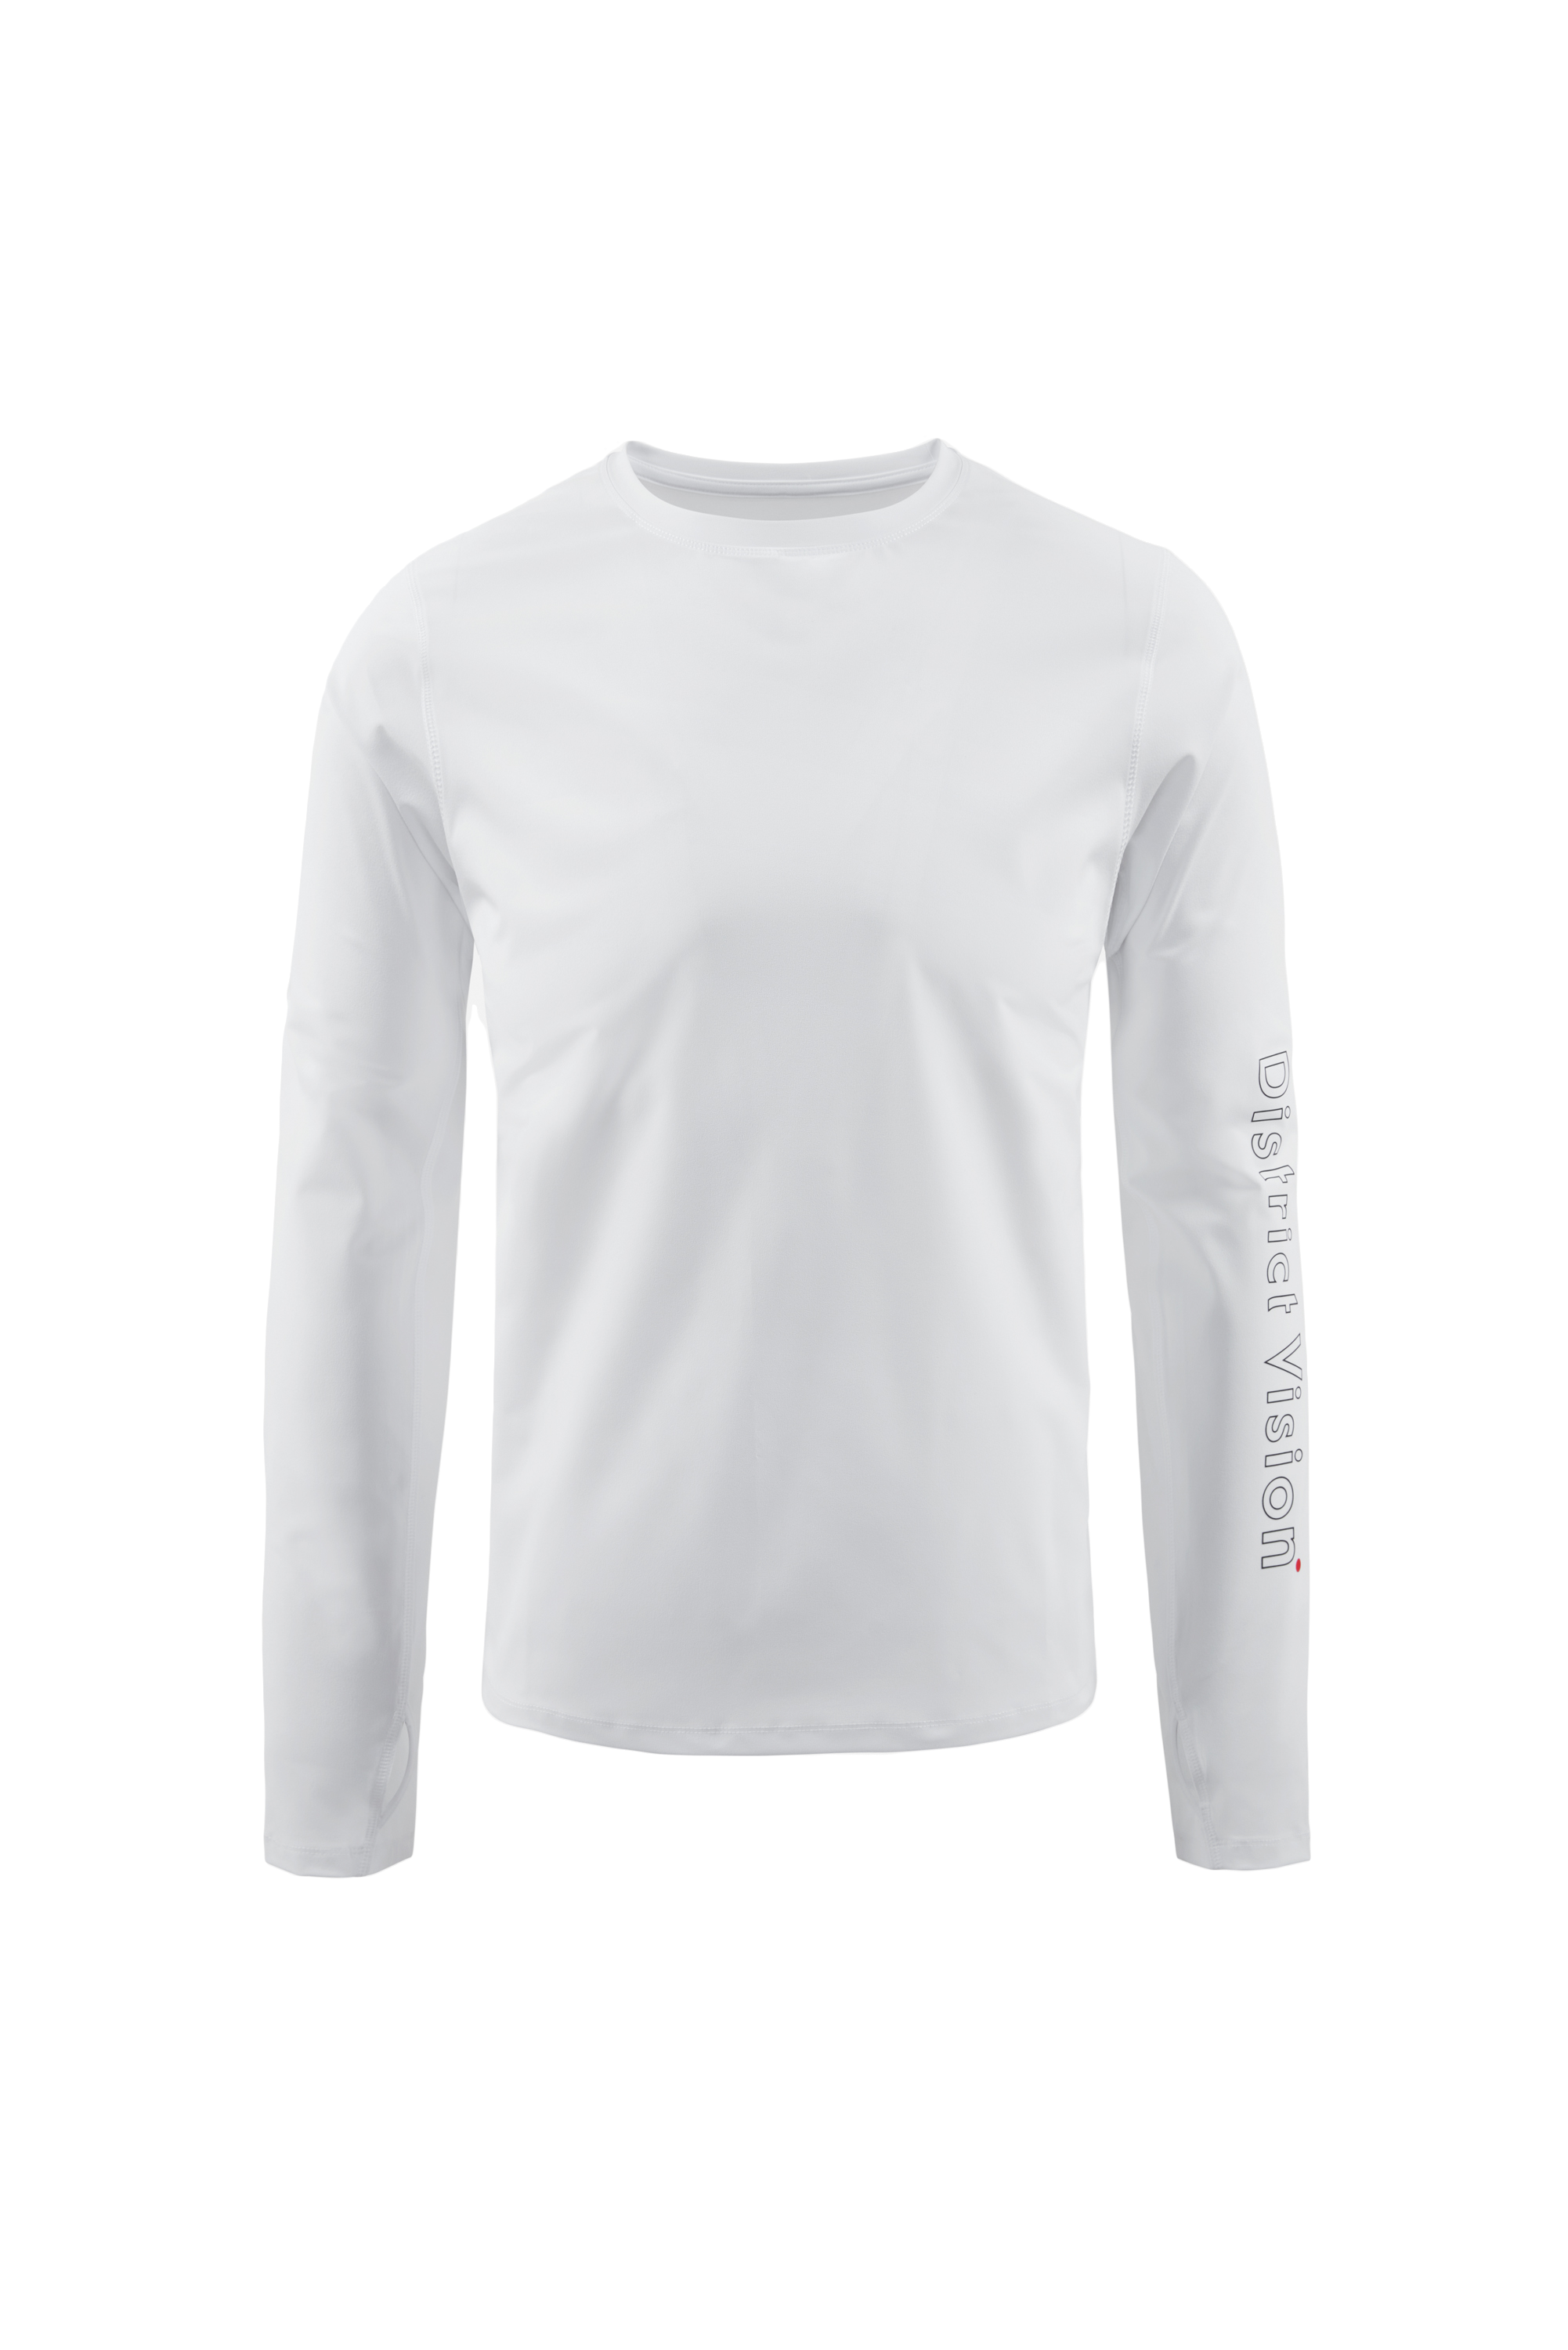 Palisade Long Sleeve Trail Shirt, White